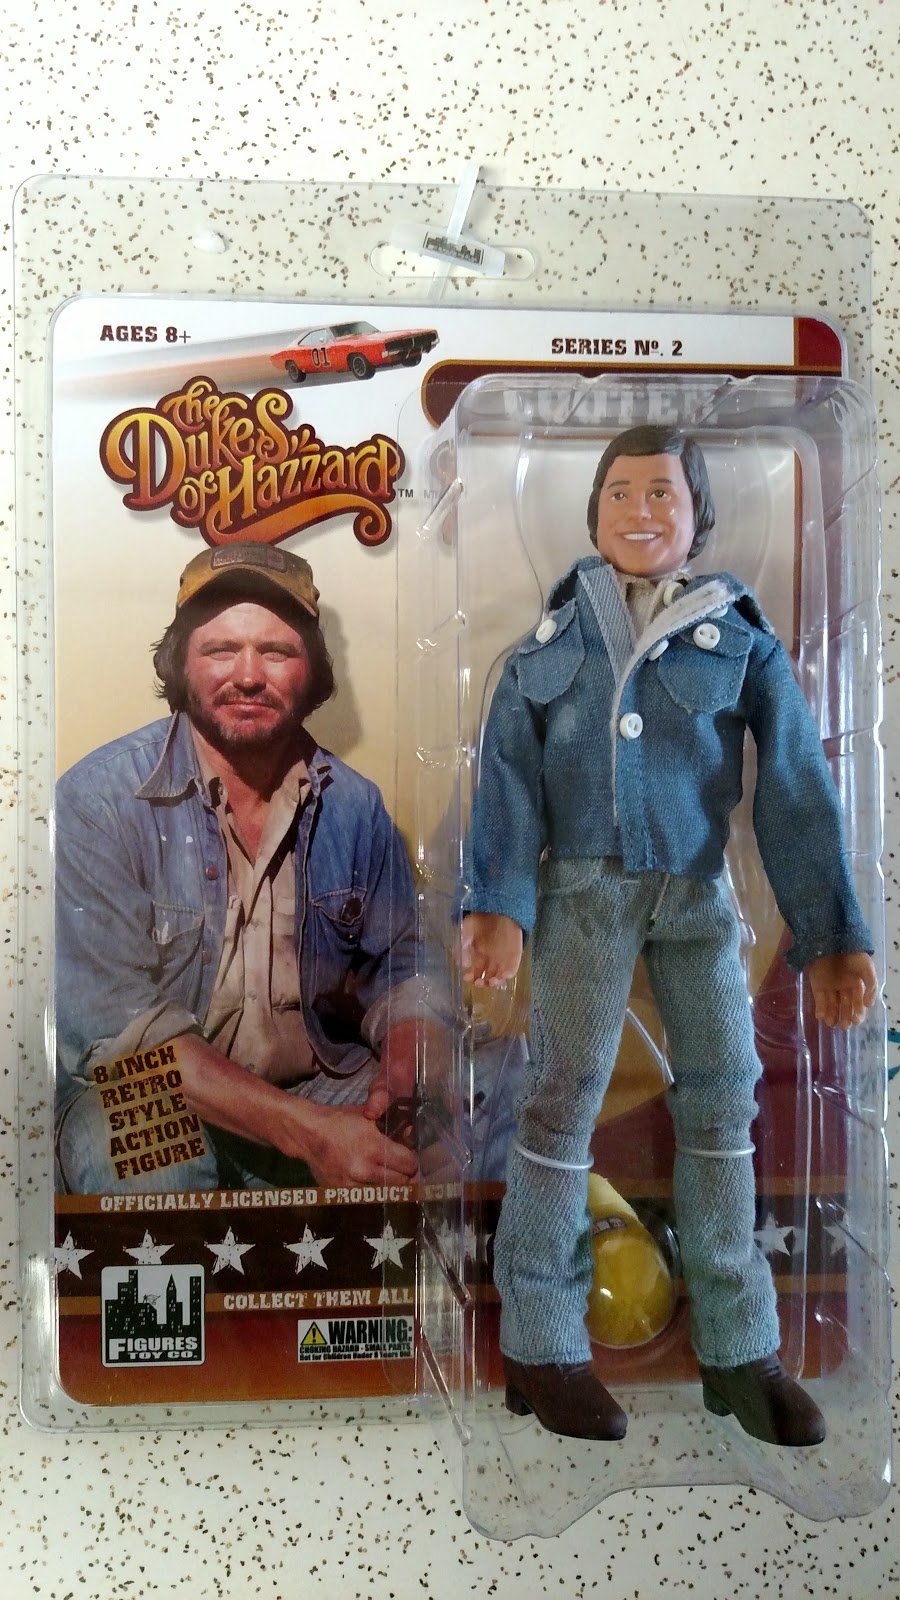 Dukes of Hazzard Collector: Figures Toy Co.'s Dukes of Hazzard Action ...